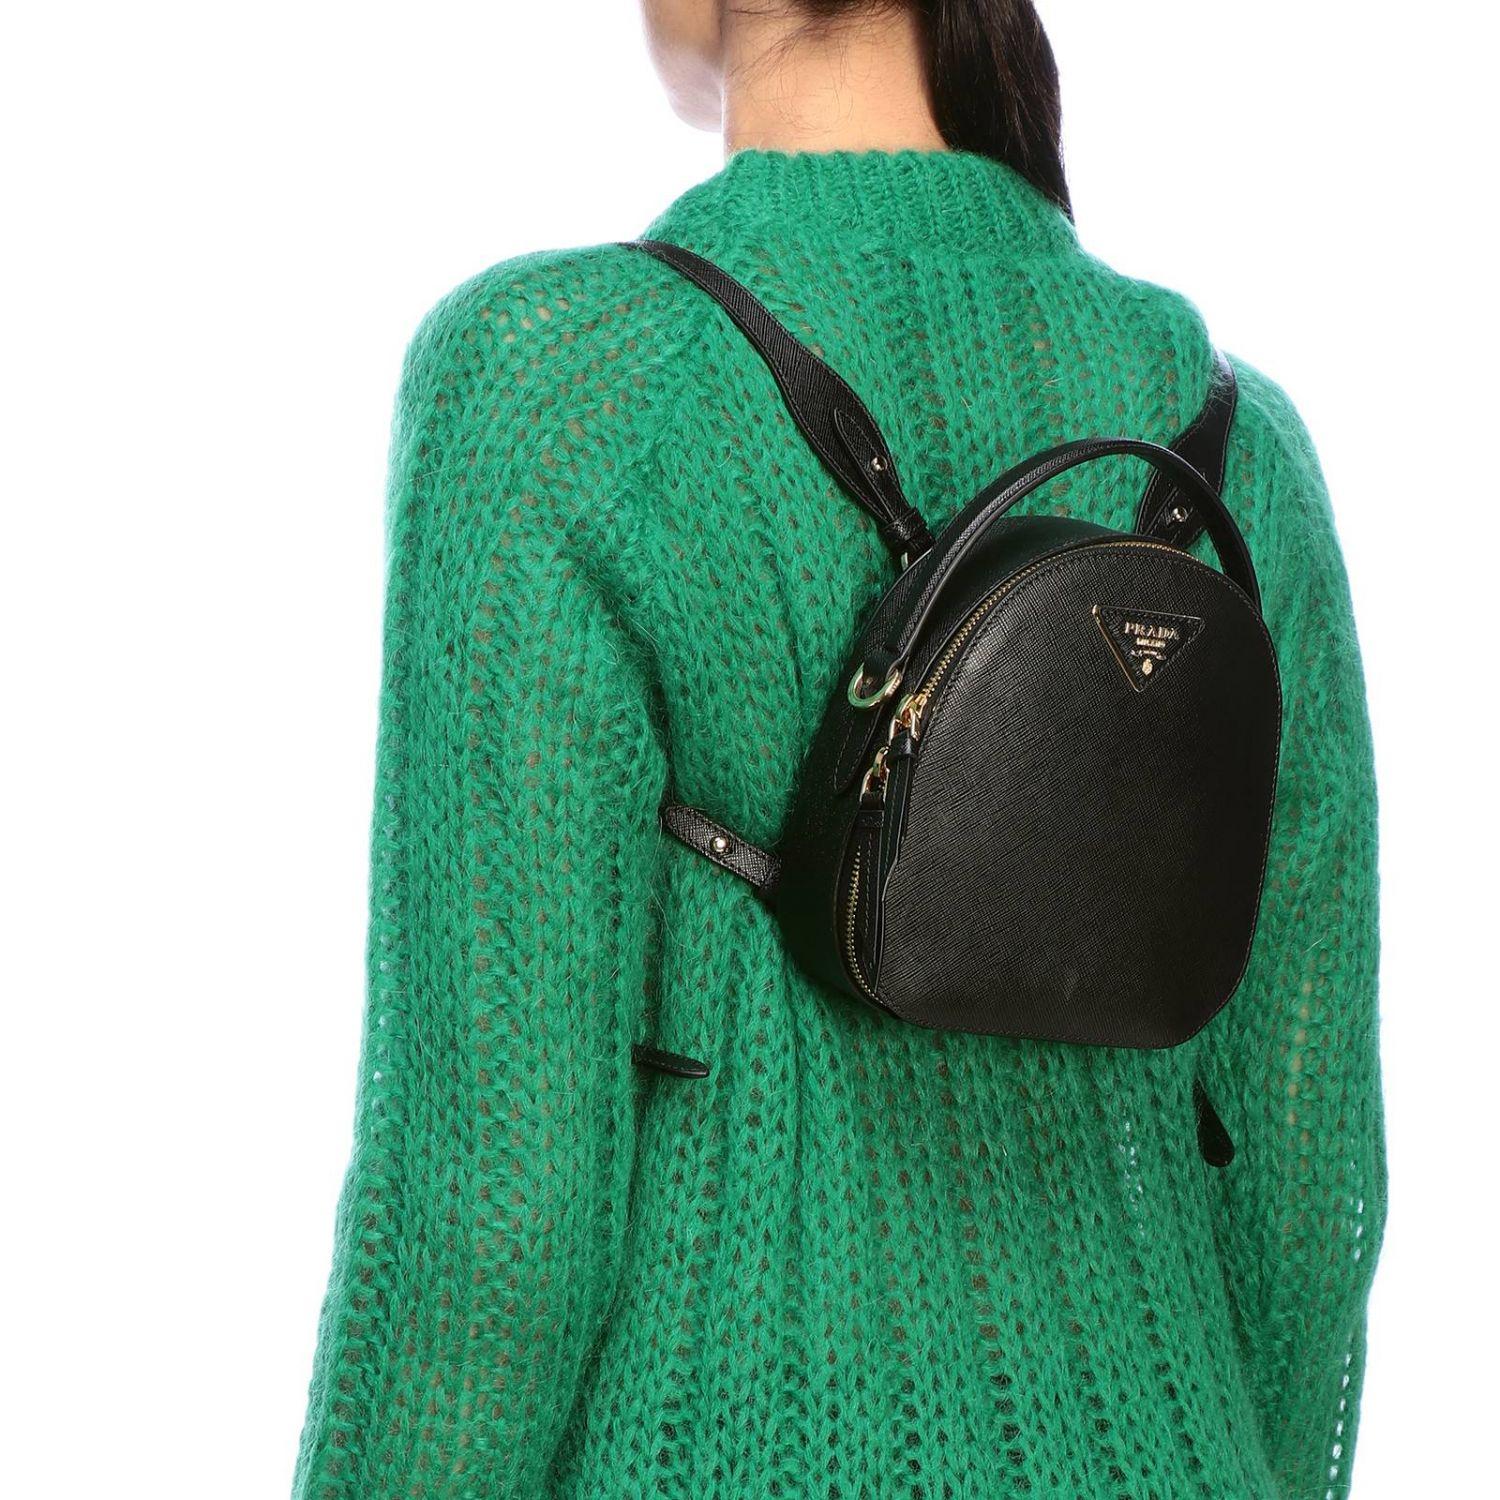 PRADA: Odette bag in saffiano leather - Black  Prada mini bag 1BH123 NZV  online at